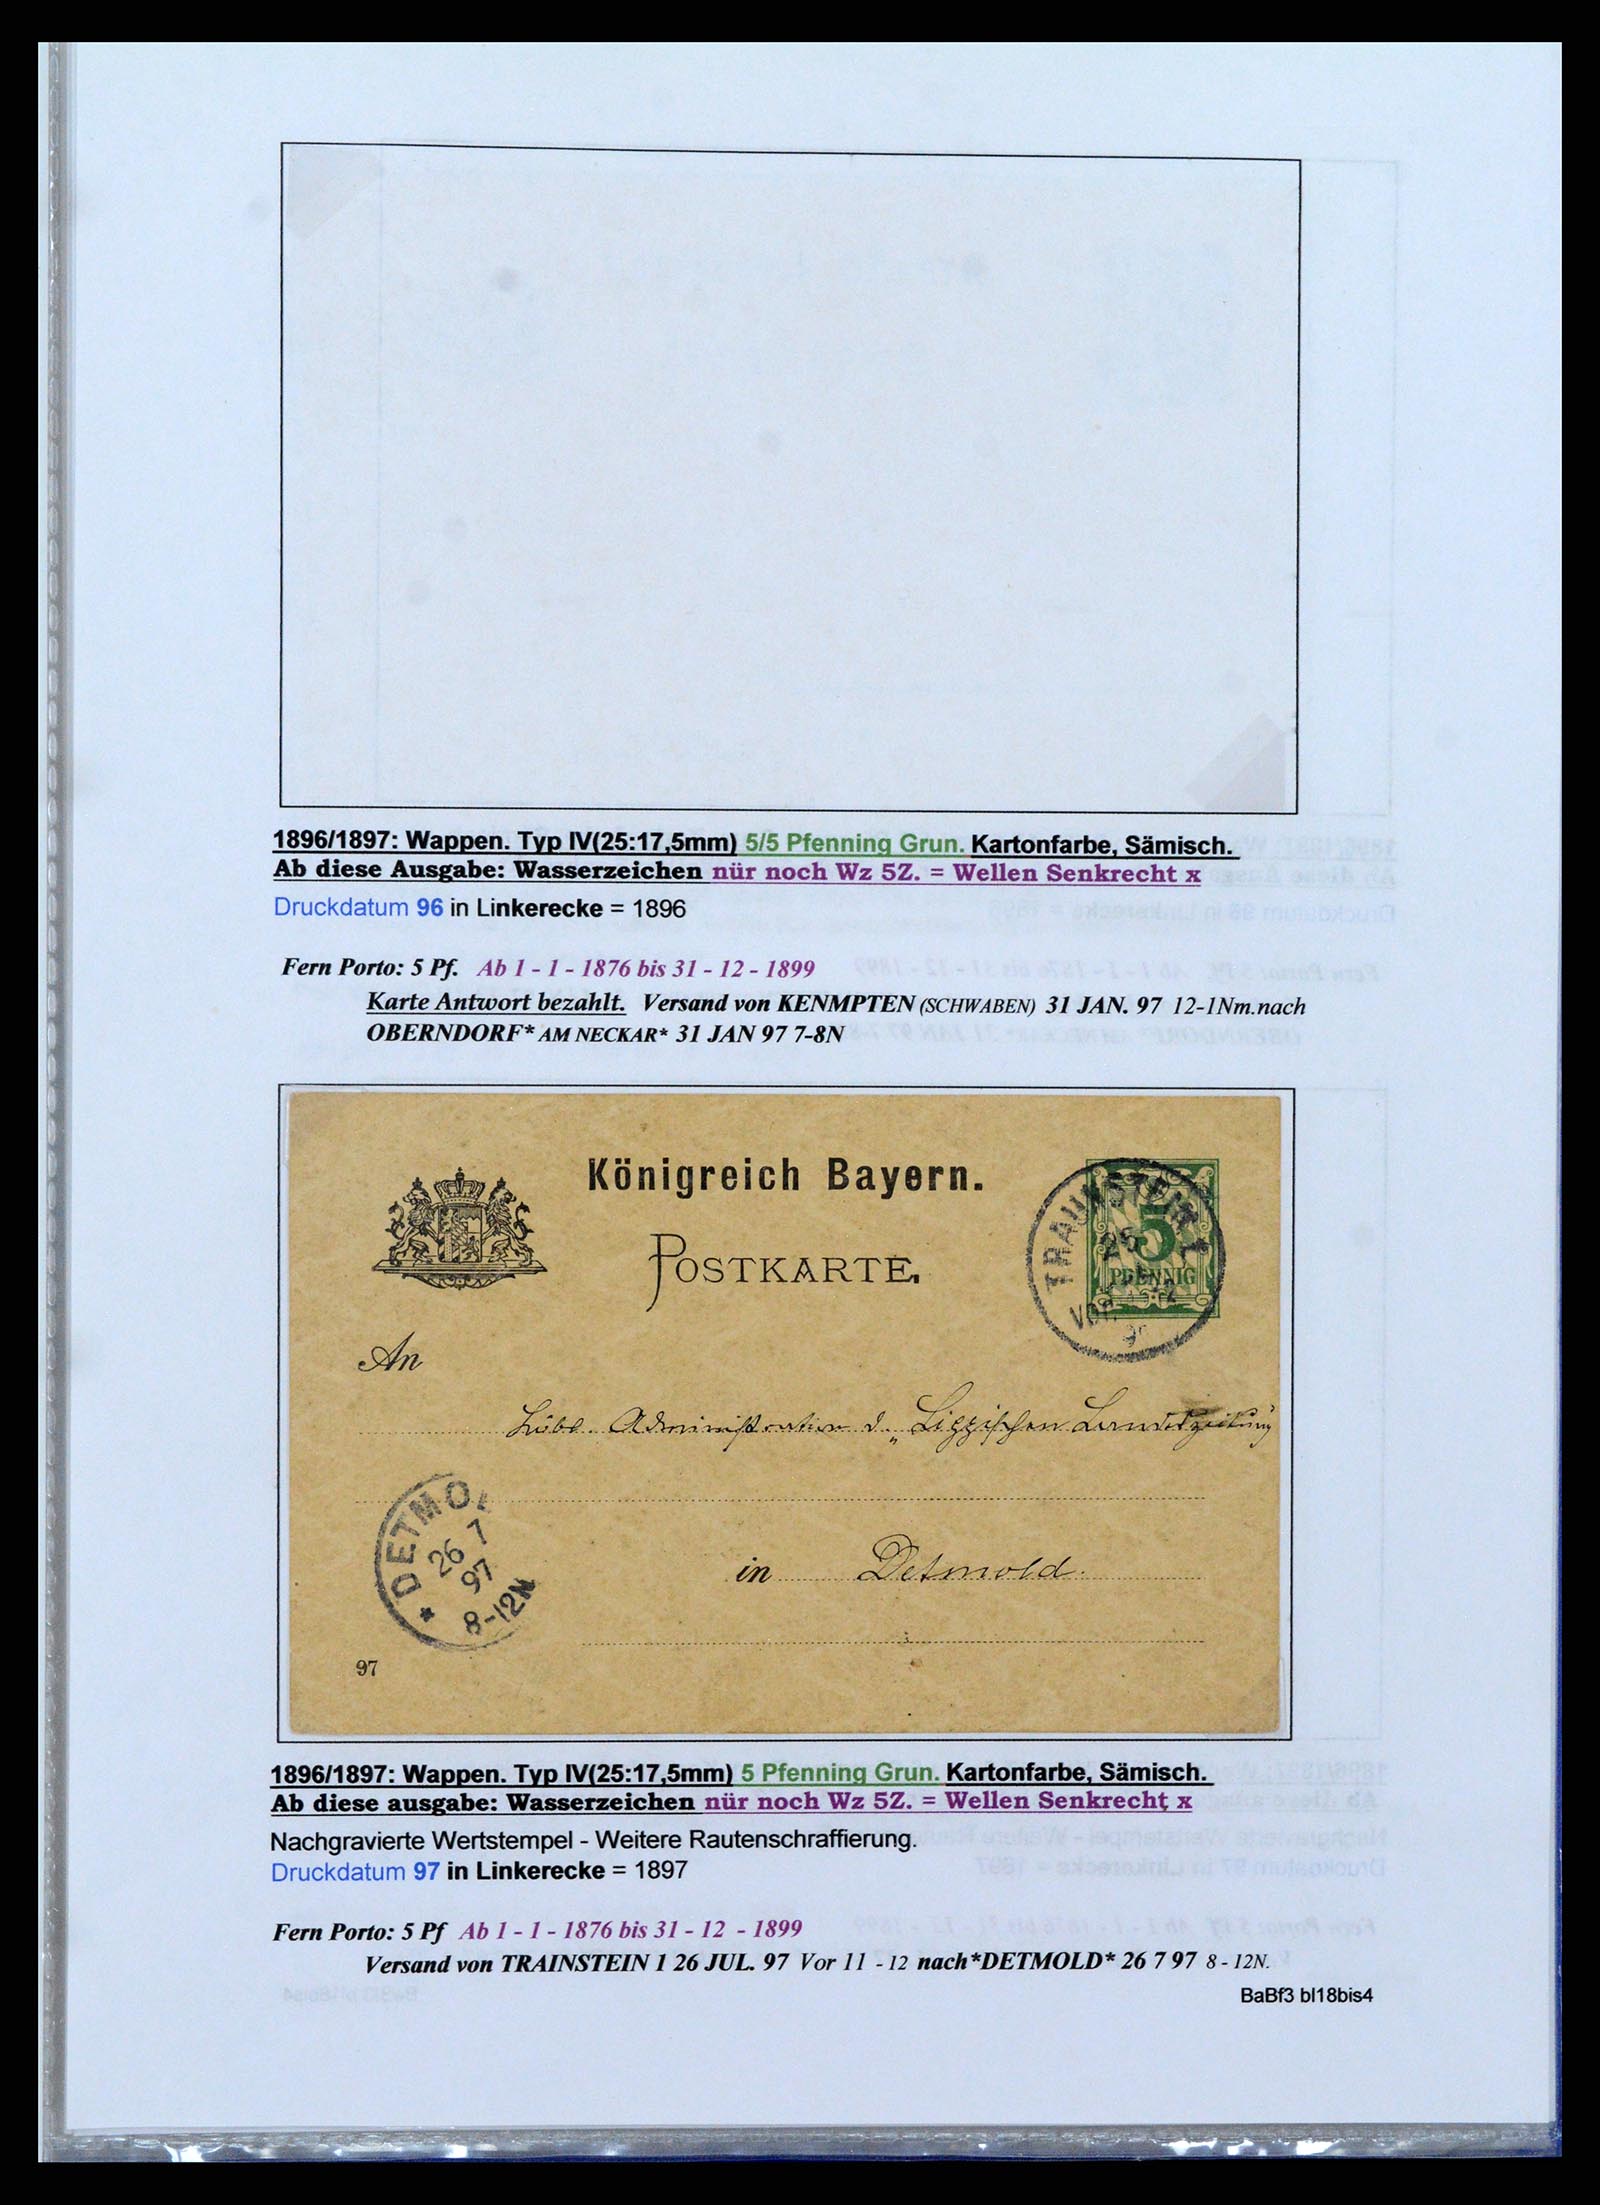 37097 163 - Stamp collection 37097 Bavaria postal stationeries 1870-1920.